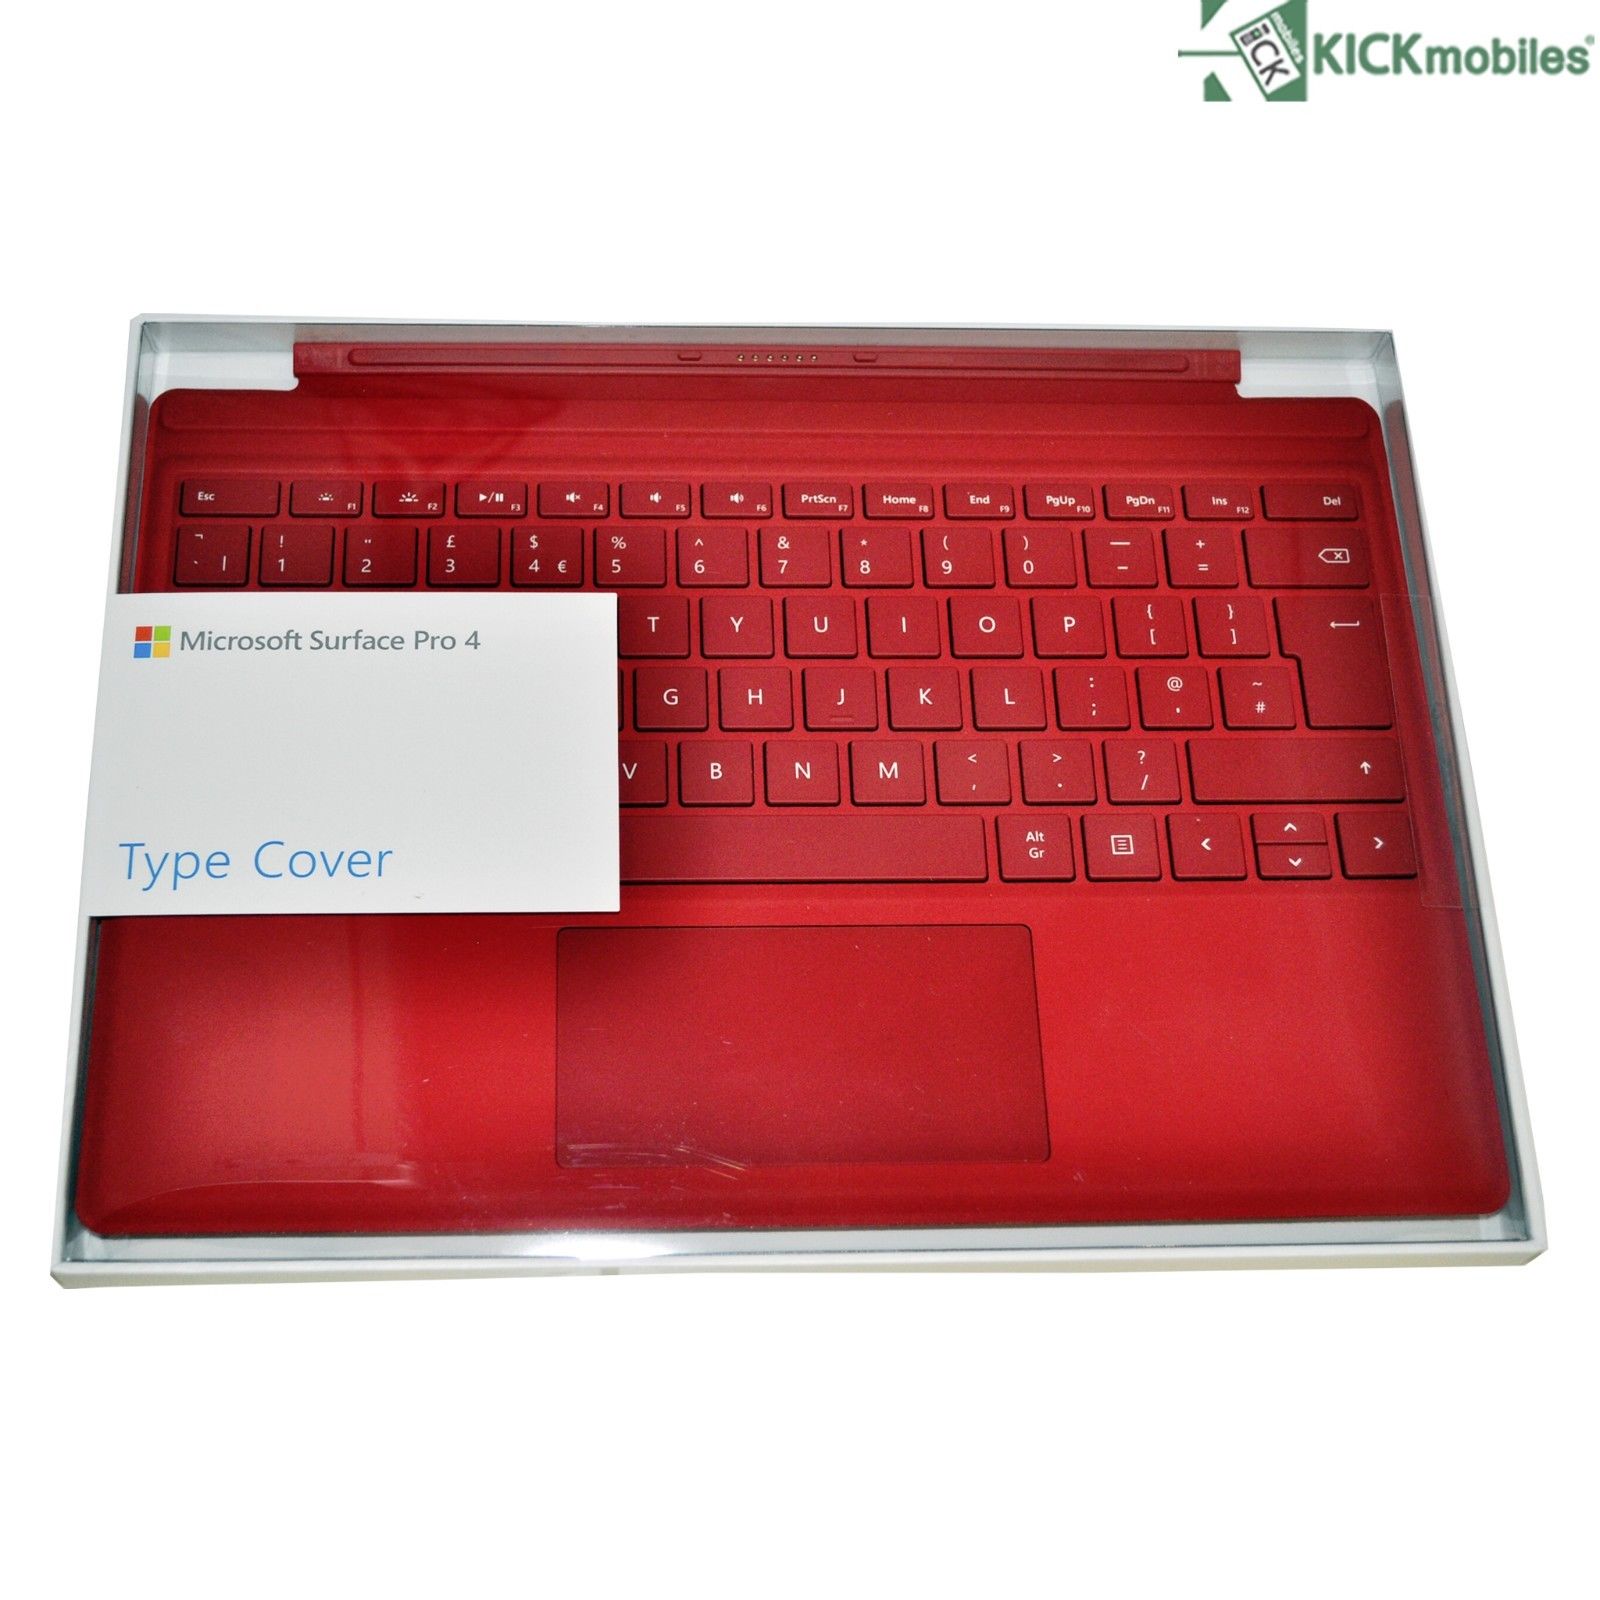 Microsoft Surface Pro 4 / Pro 3 Type Cover QWERTY UK Keyboard Red | eBay